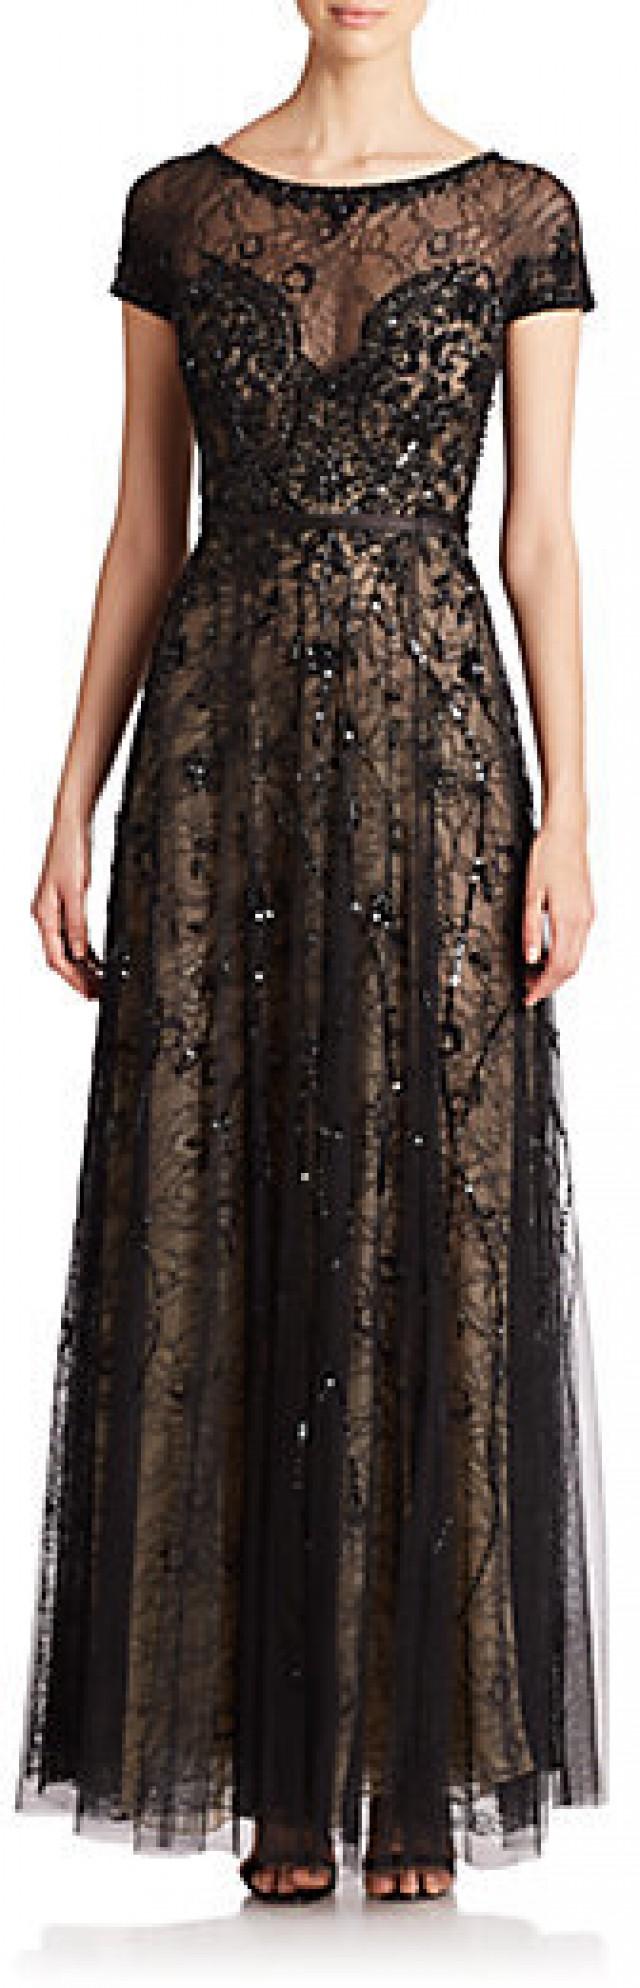 Basix Black Label Sheer Lace Embellished Gown #2278927 - Weddbook